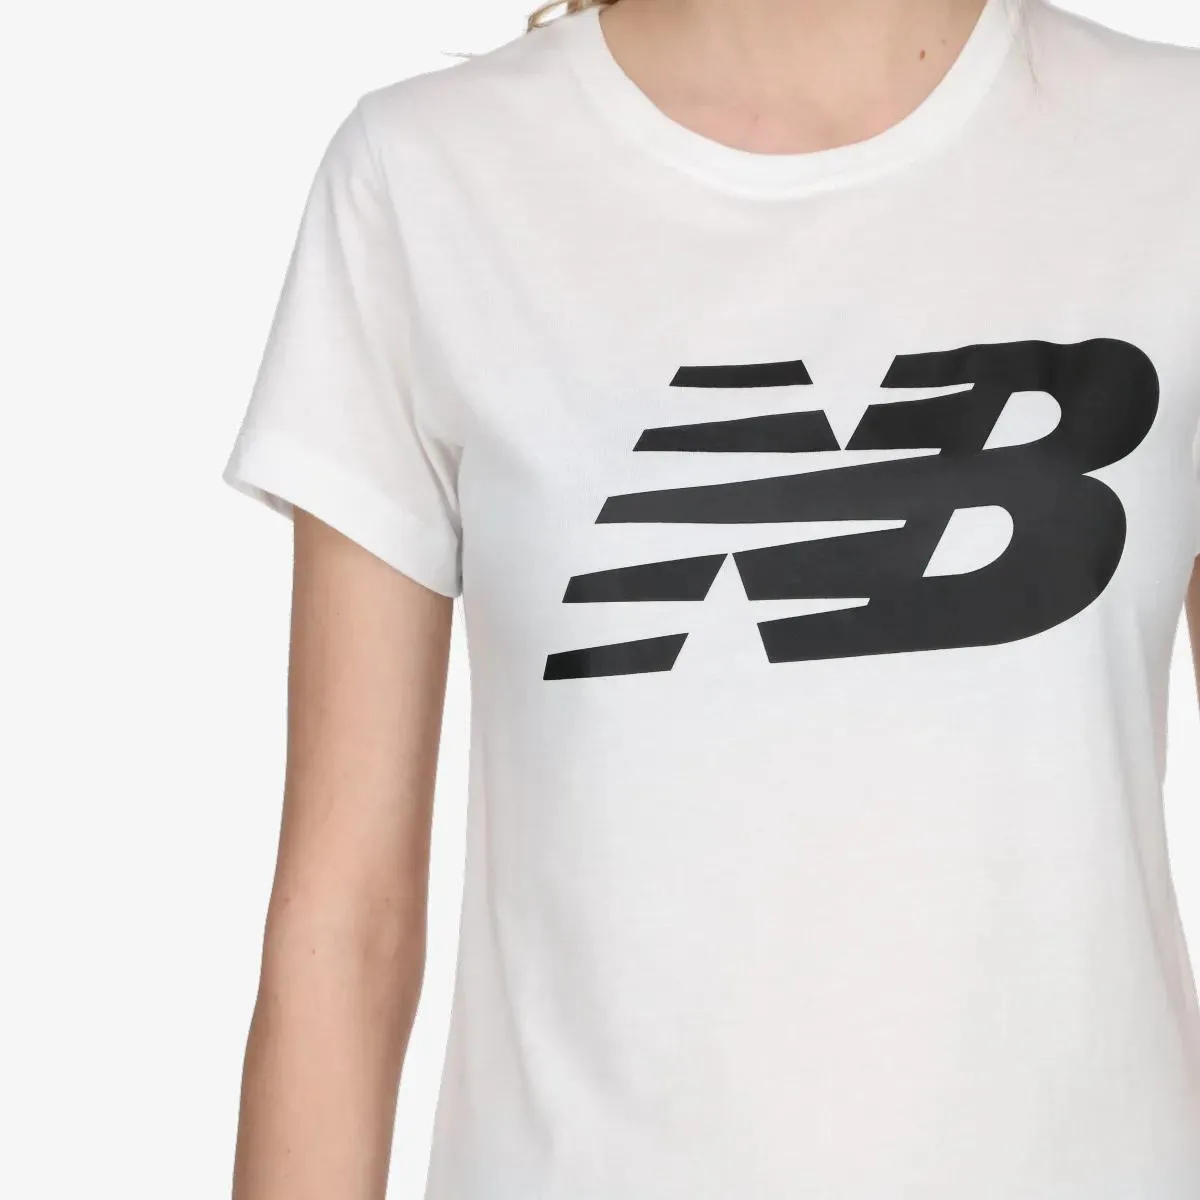 New Balance T-shirt CLASSIC CORE FLEECE 